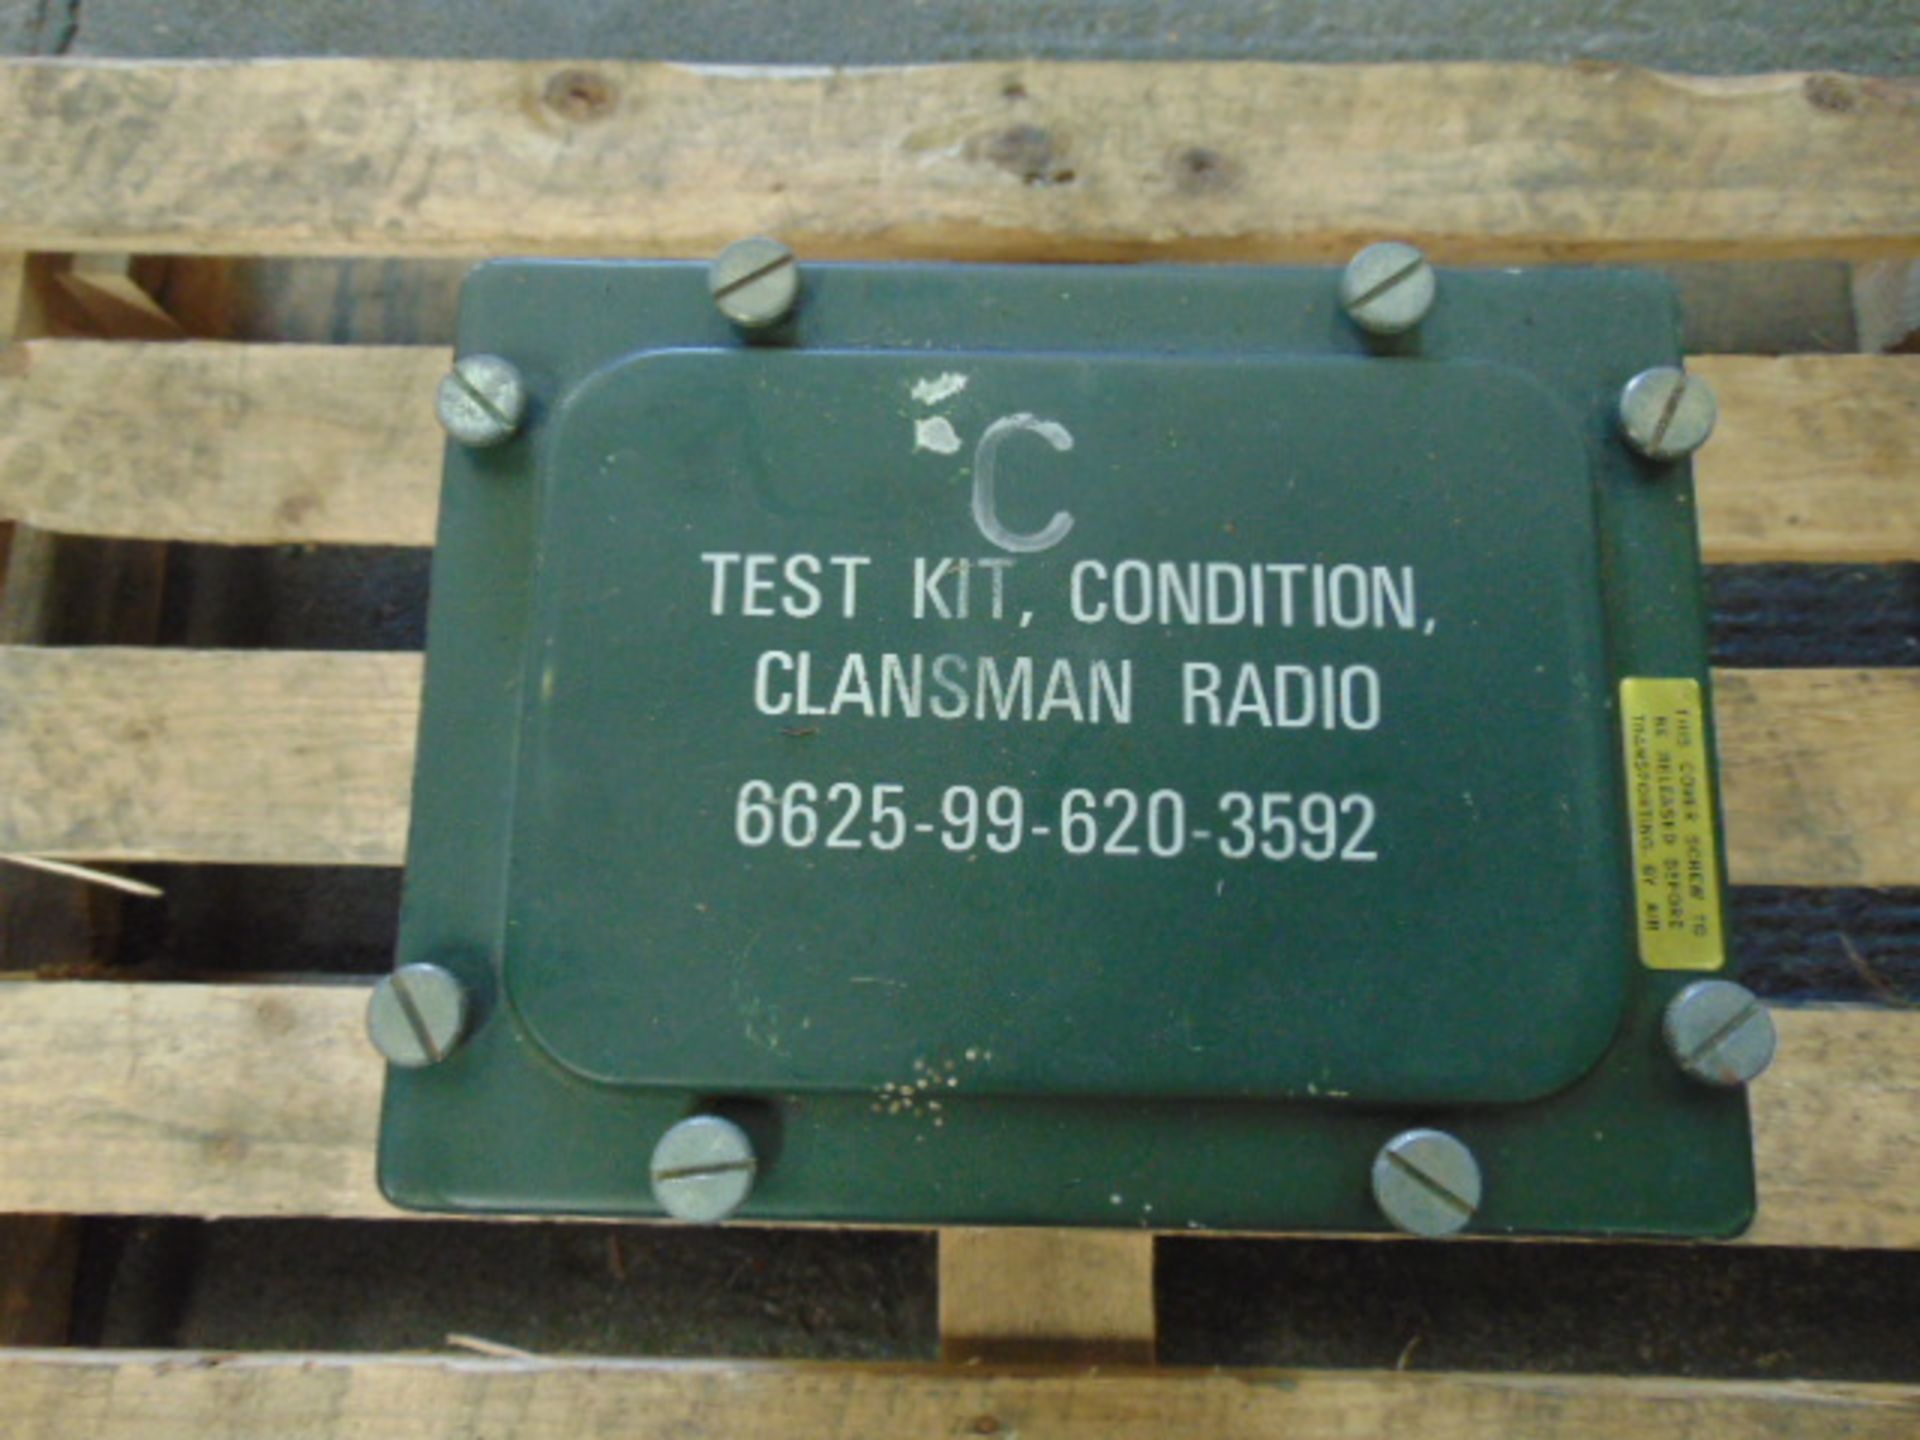 Clansman Radio Condition Test Kit - Image 4 of 6